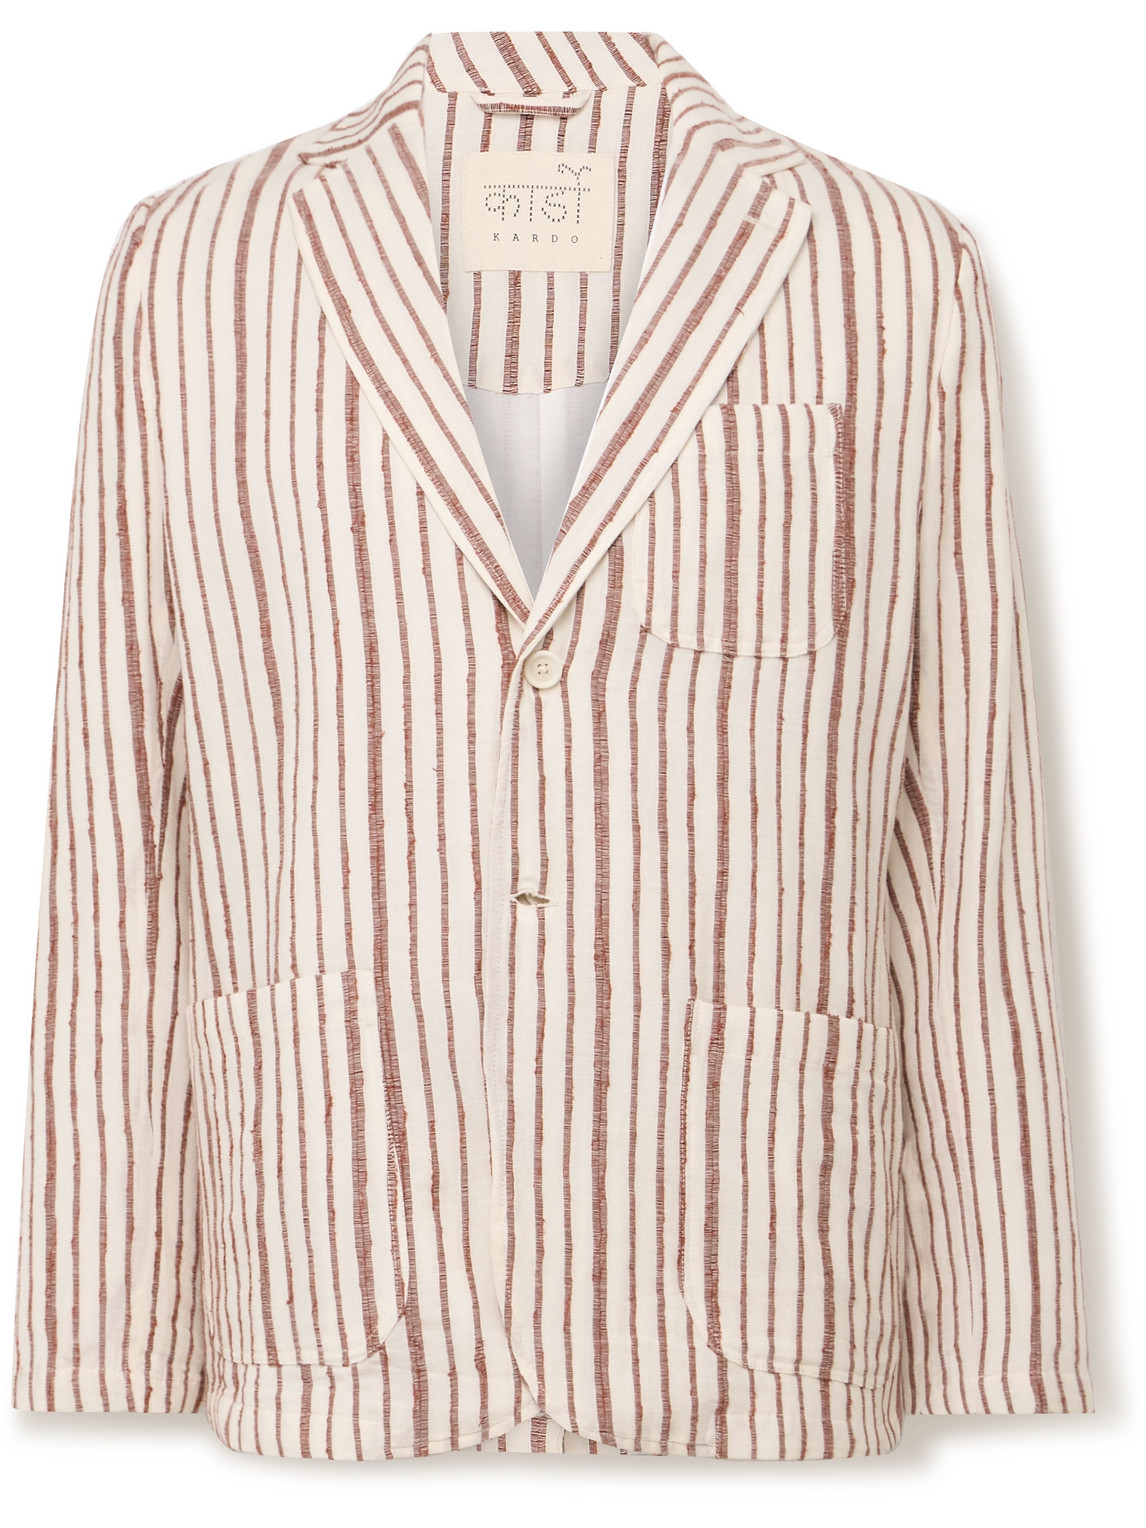 Kardo Hugh Embroidered Striped Cotton Suit Jacket In Neutrals